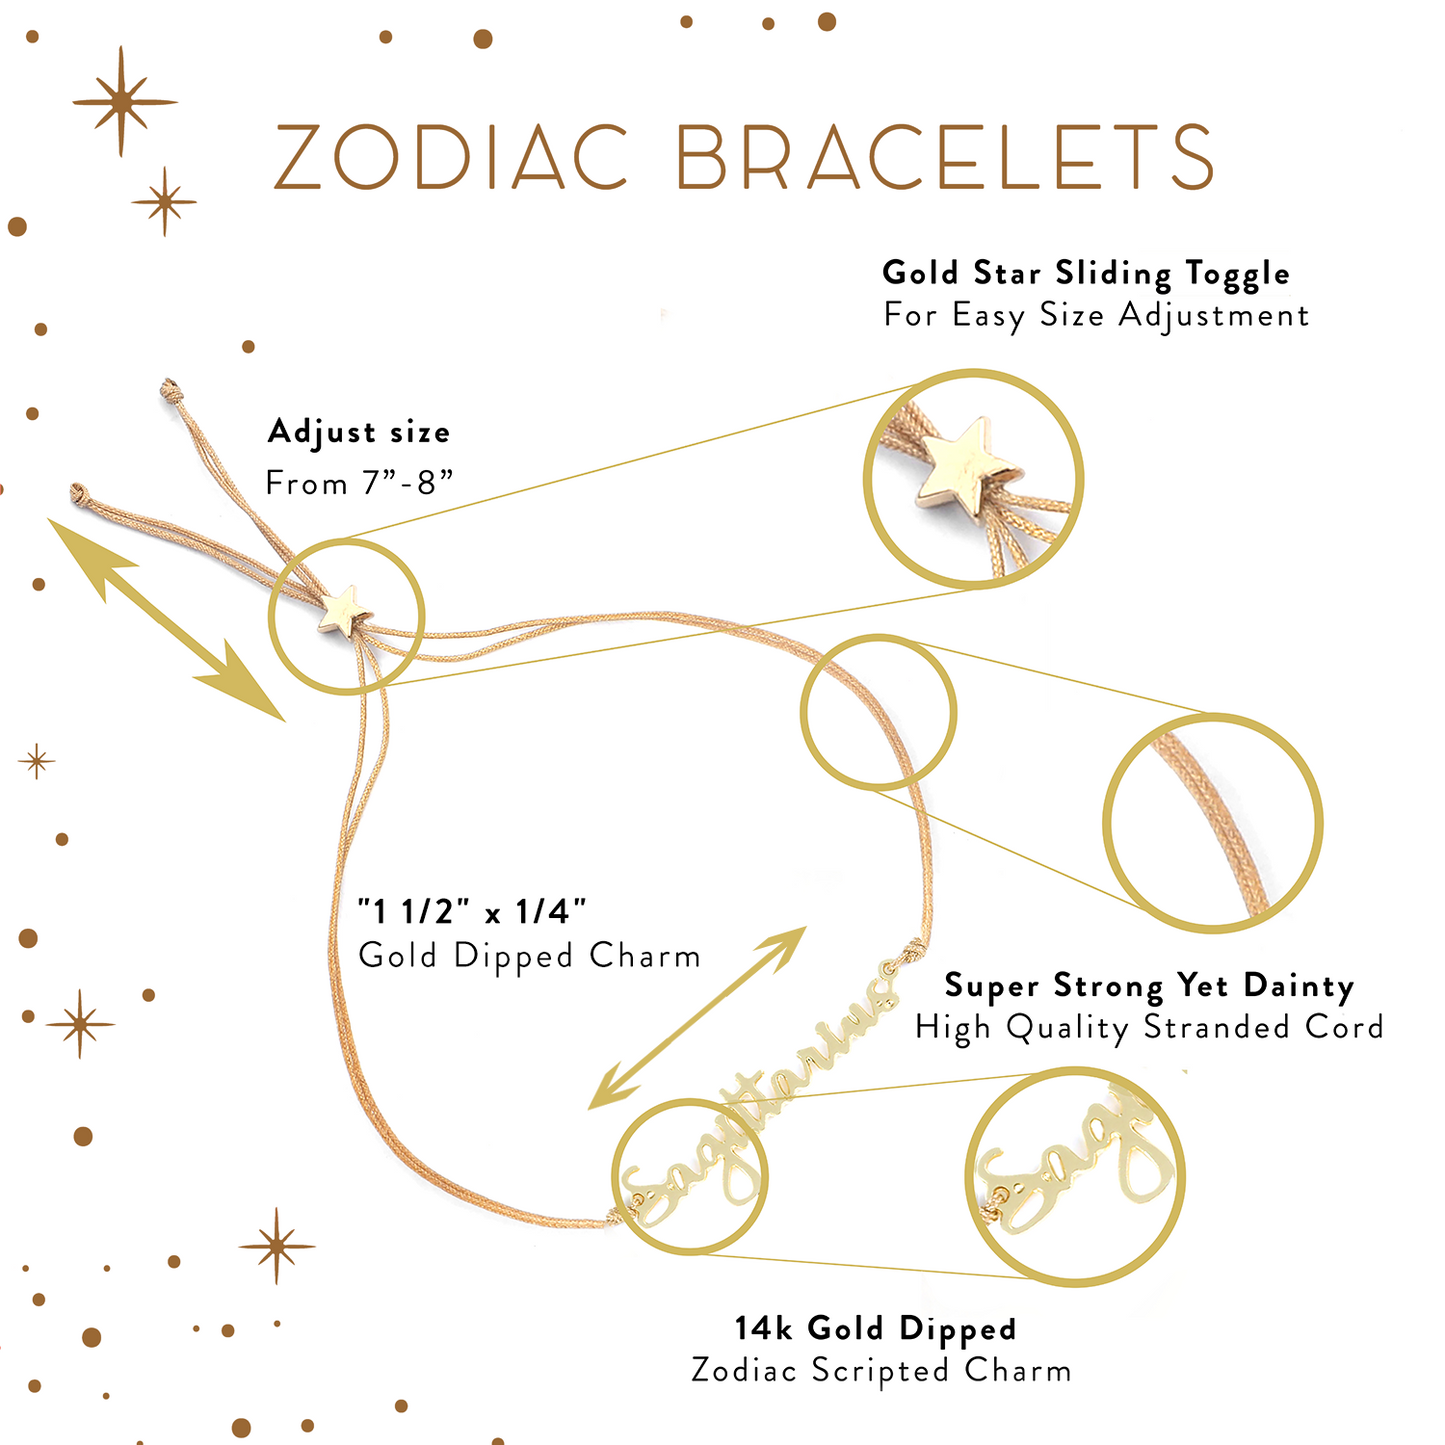 Zodiac Bundle: Build Your Zodiac Collection and Save!